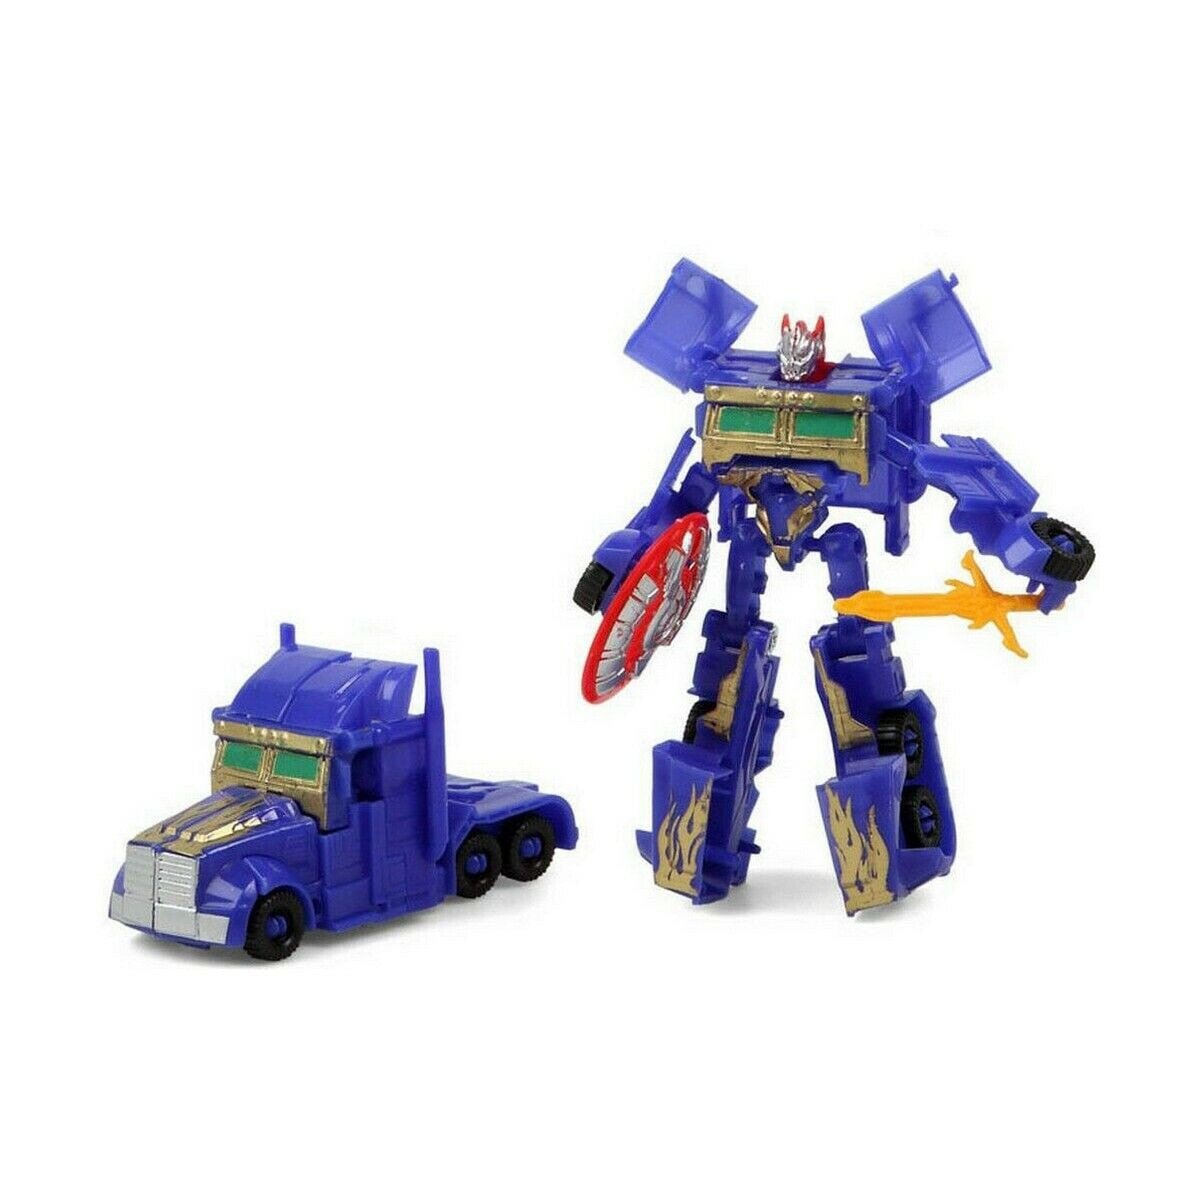 Transformers Blue Robot Vehicle 24 x 17 cm